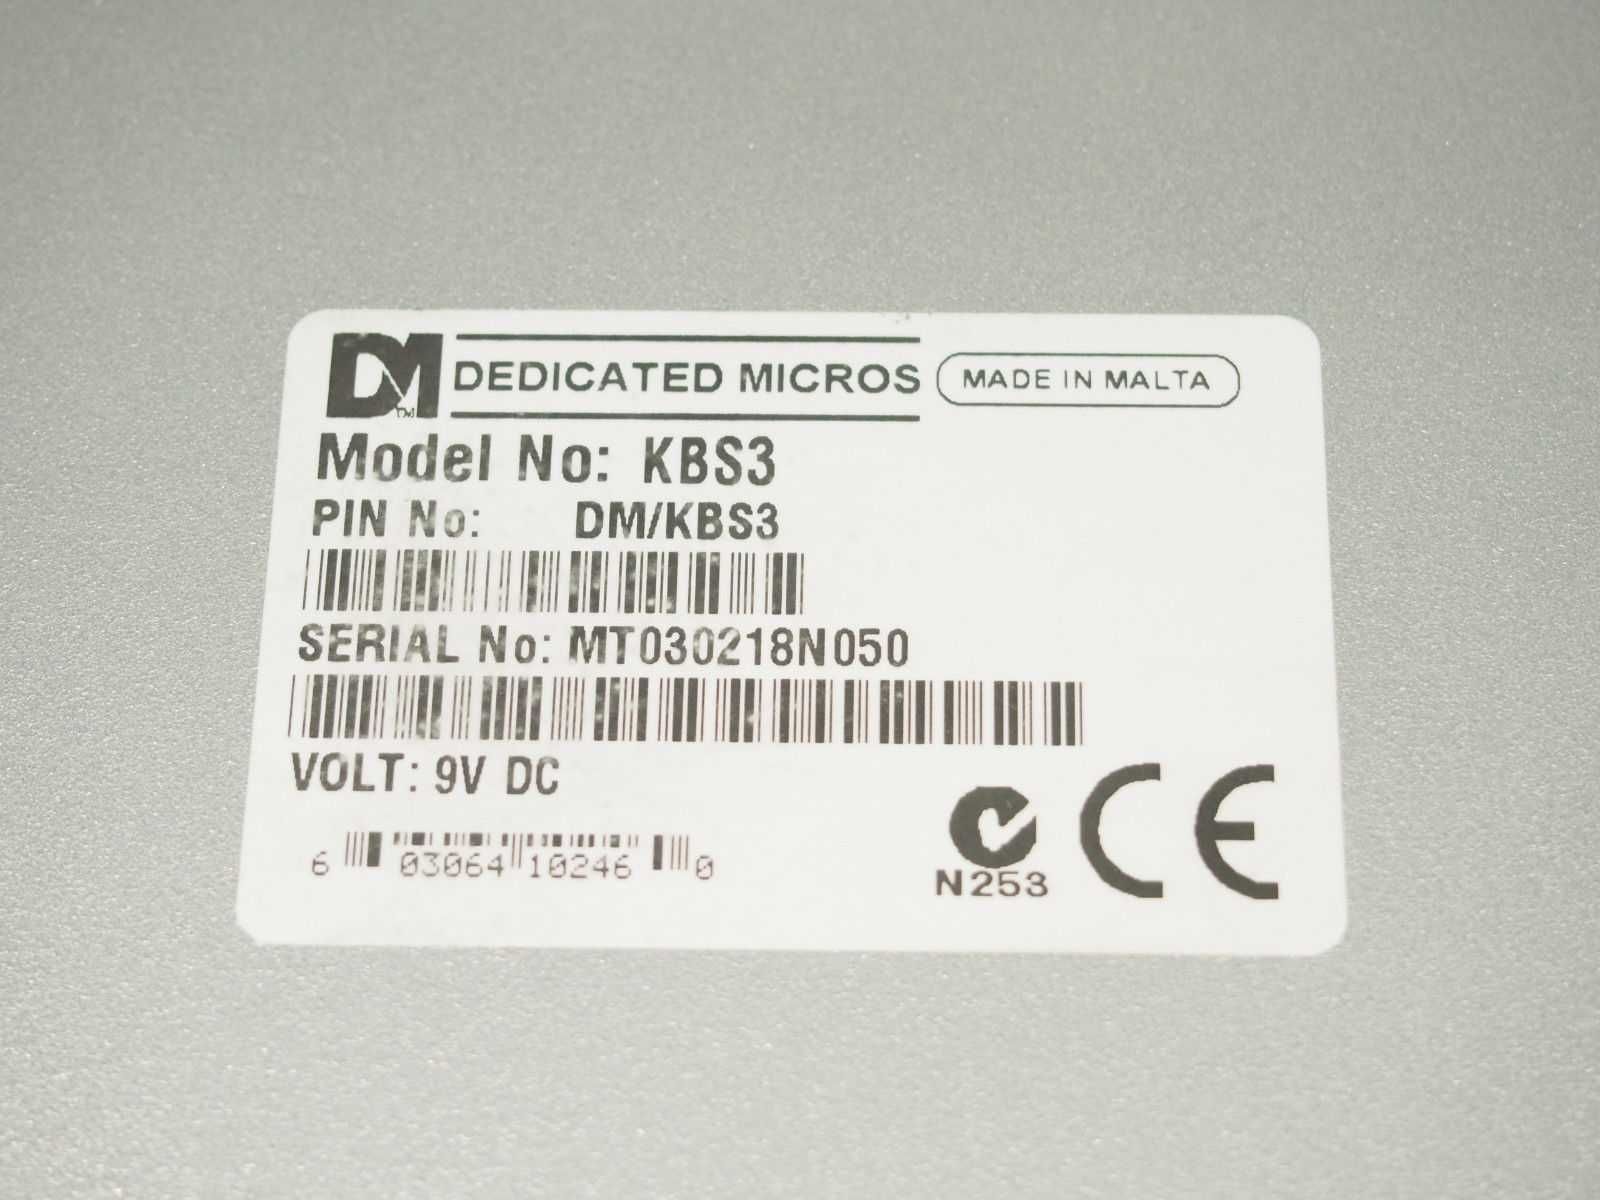 Dedicated Micros KBS3 RS-485 PTZ централь управл. поворотными камерами